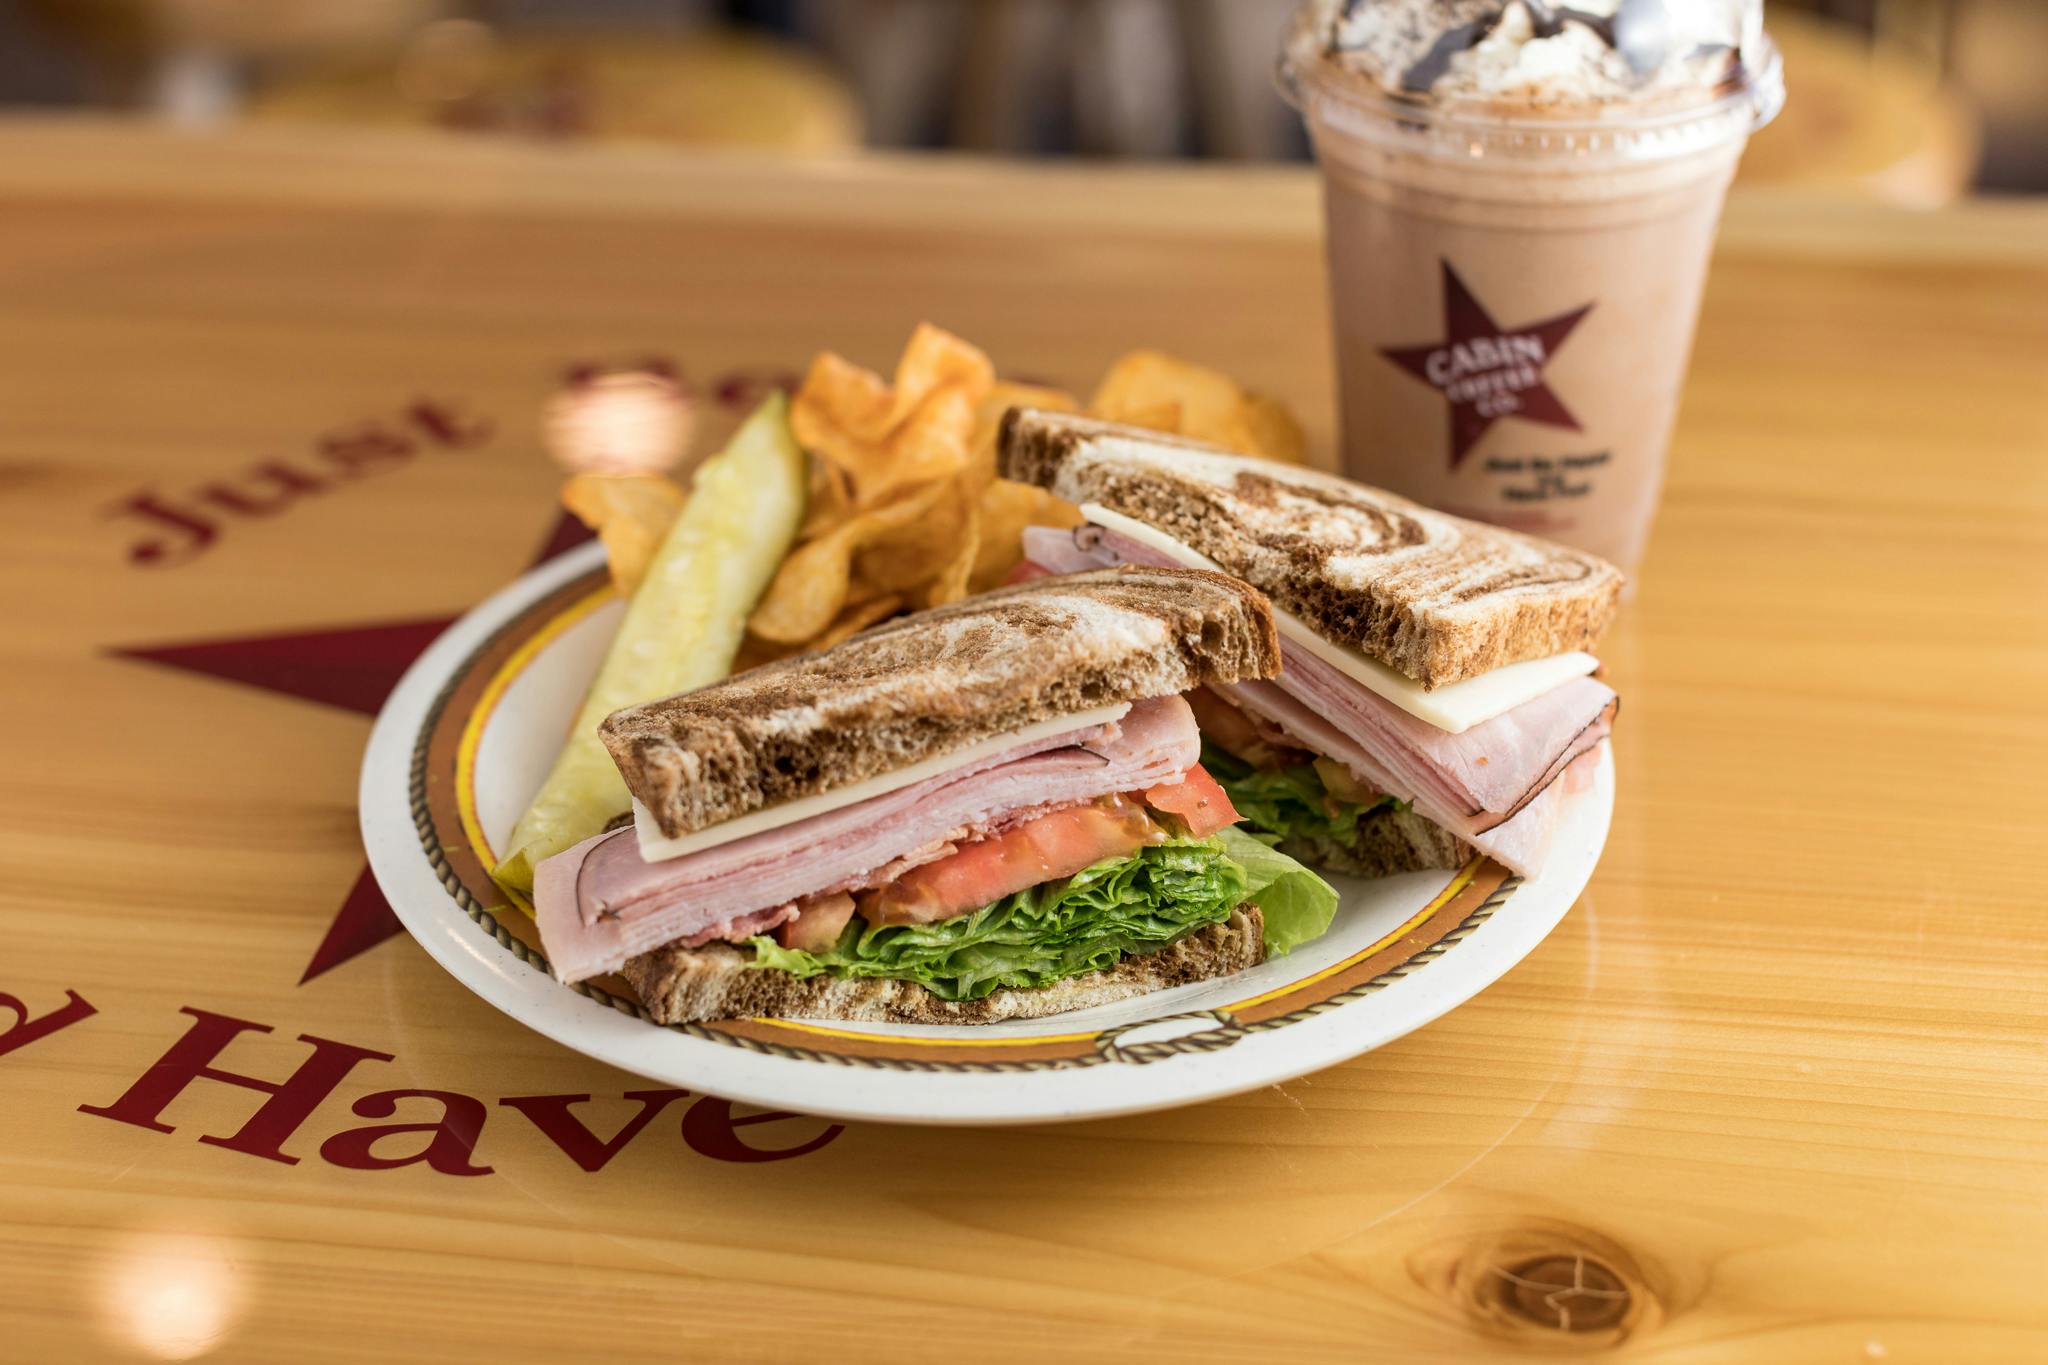 #5 Cabin Club Sandwich from Cabin Coffee Co. in Altoona, WI